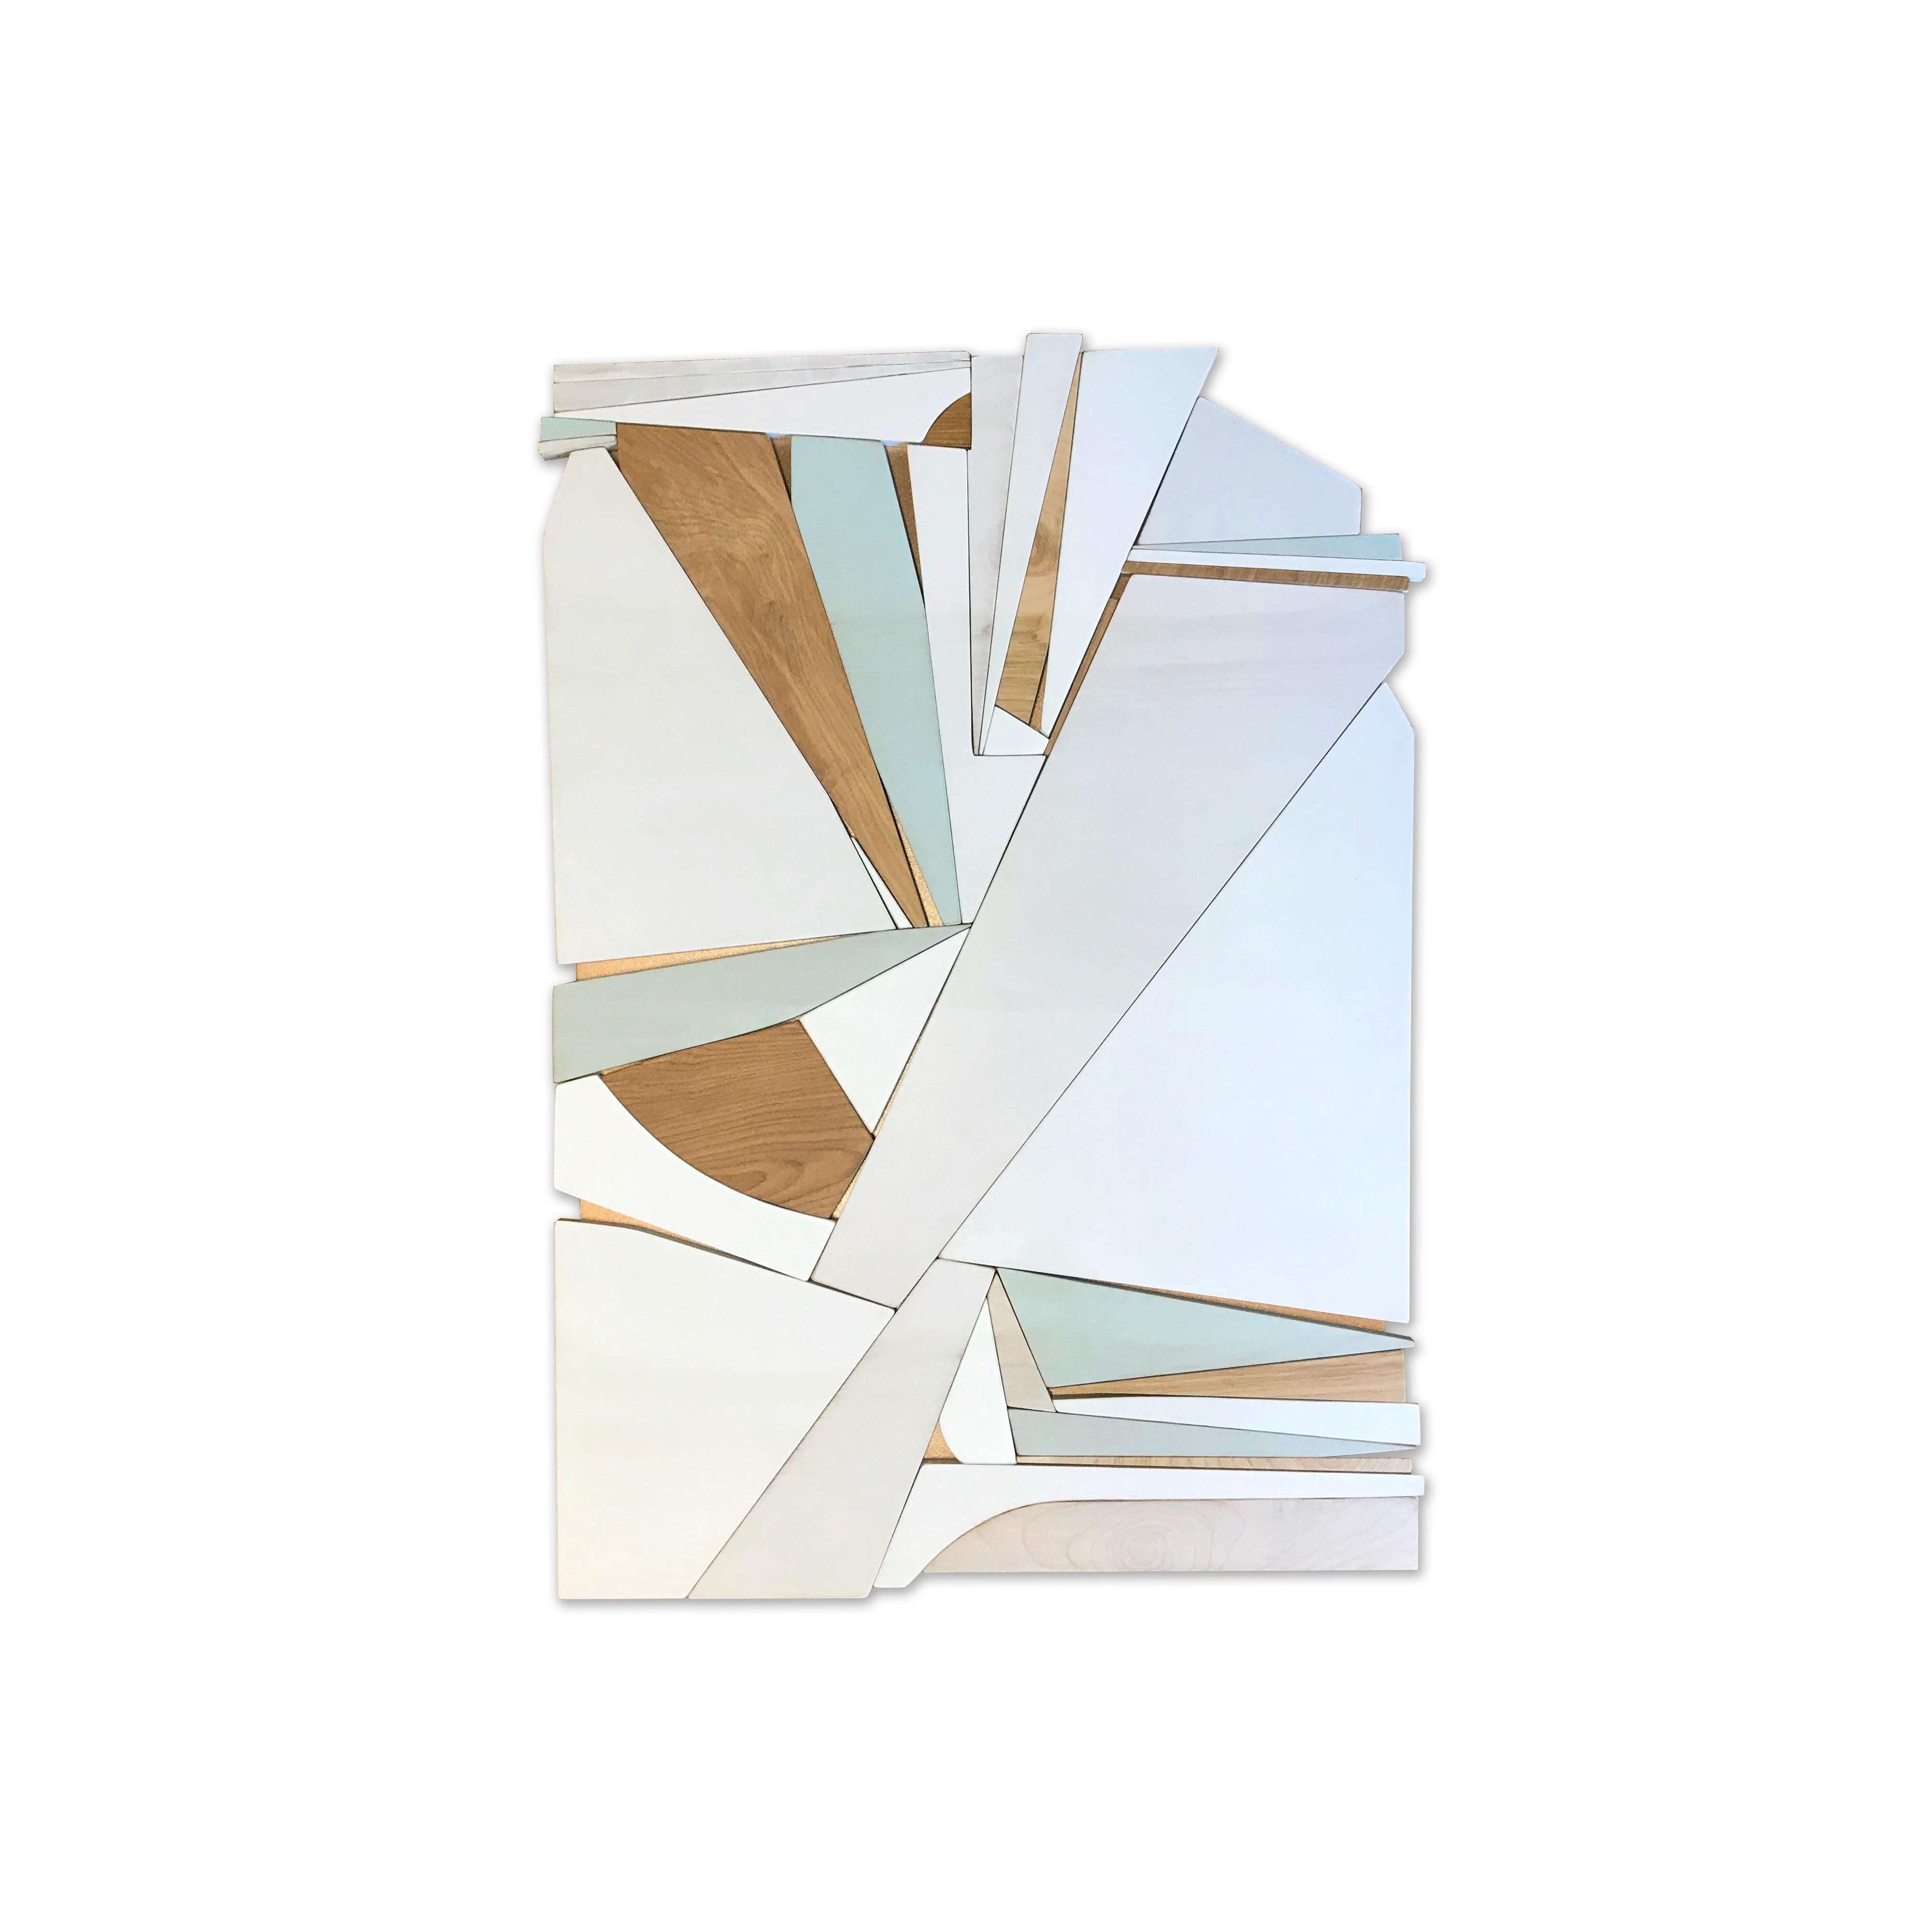 Scott Troxel Abstract Painting - Mint (white teal monochrome natural wood sculpture minimal geometric art deco)